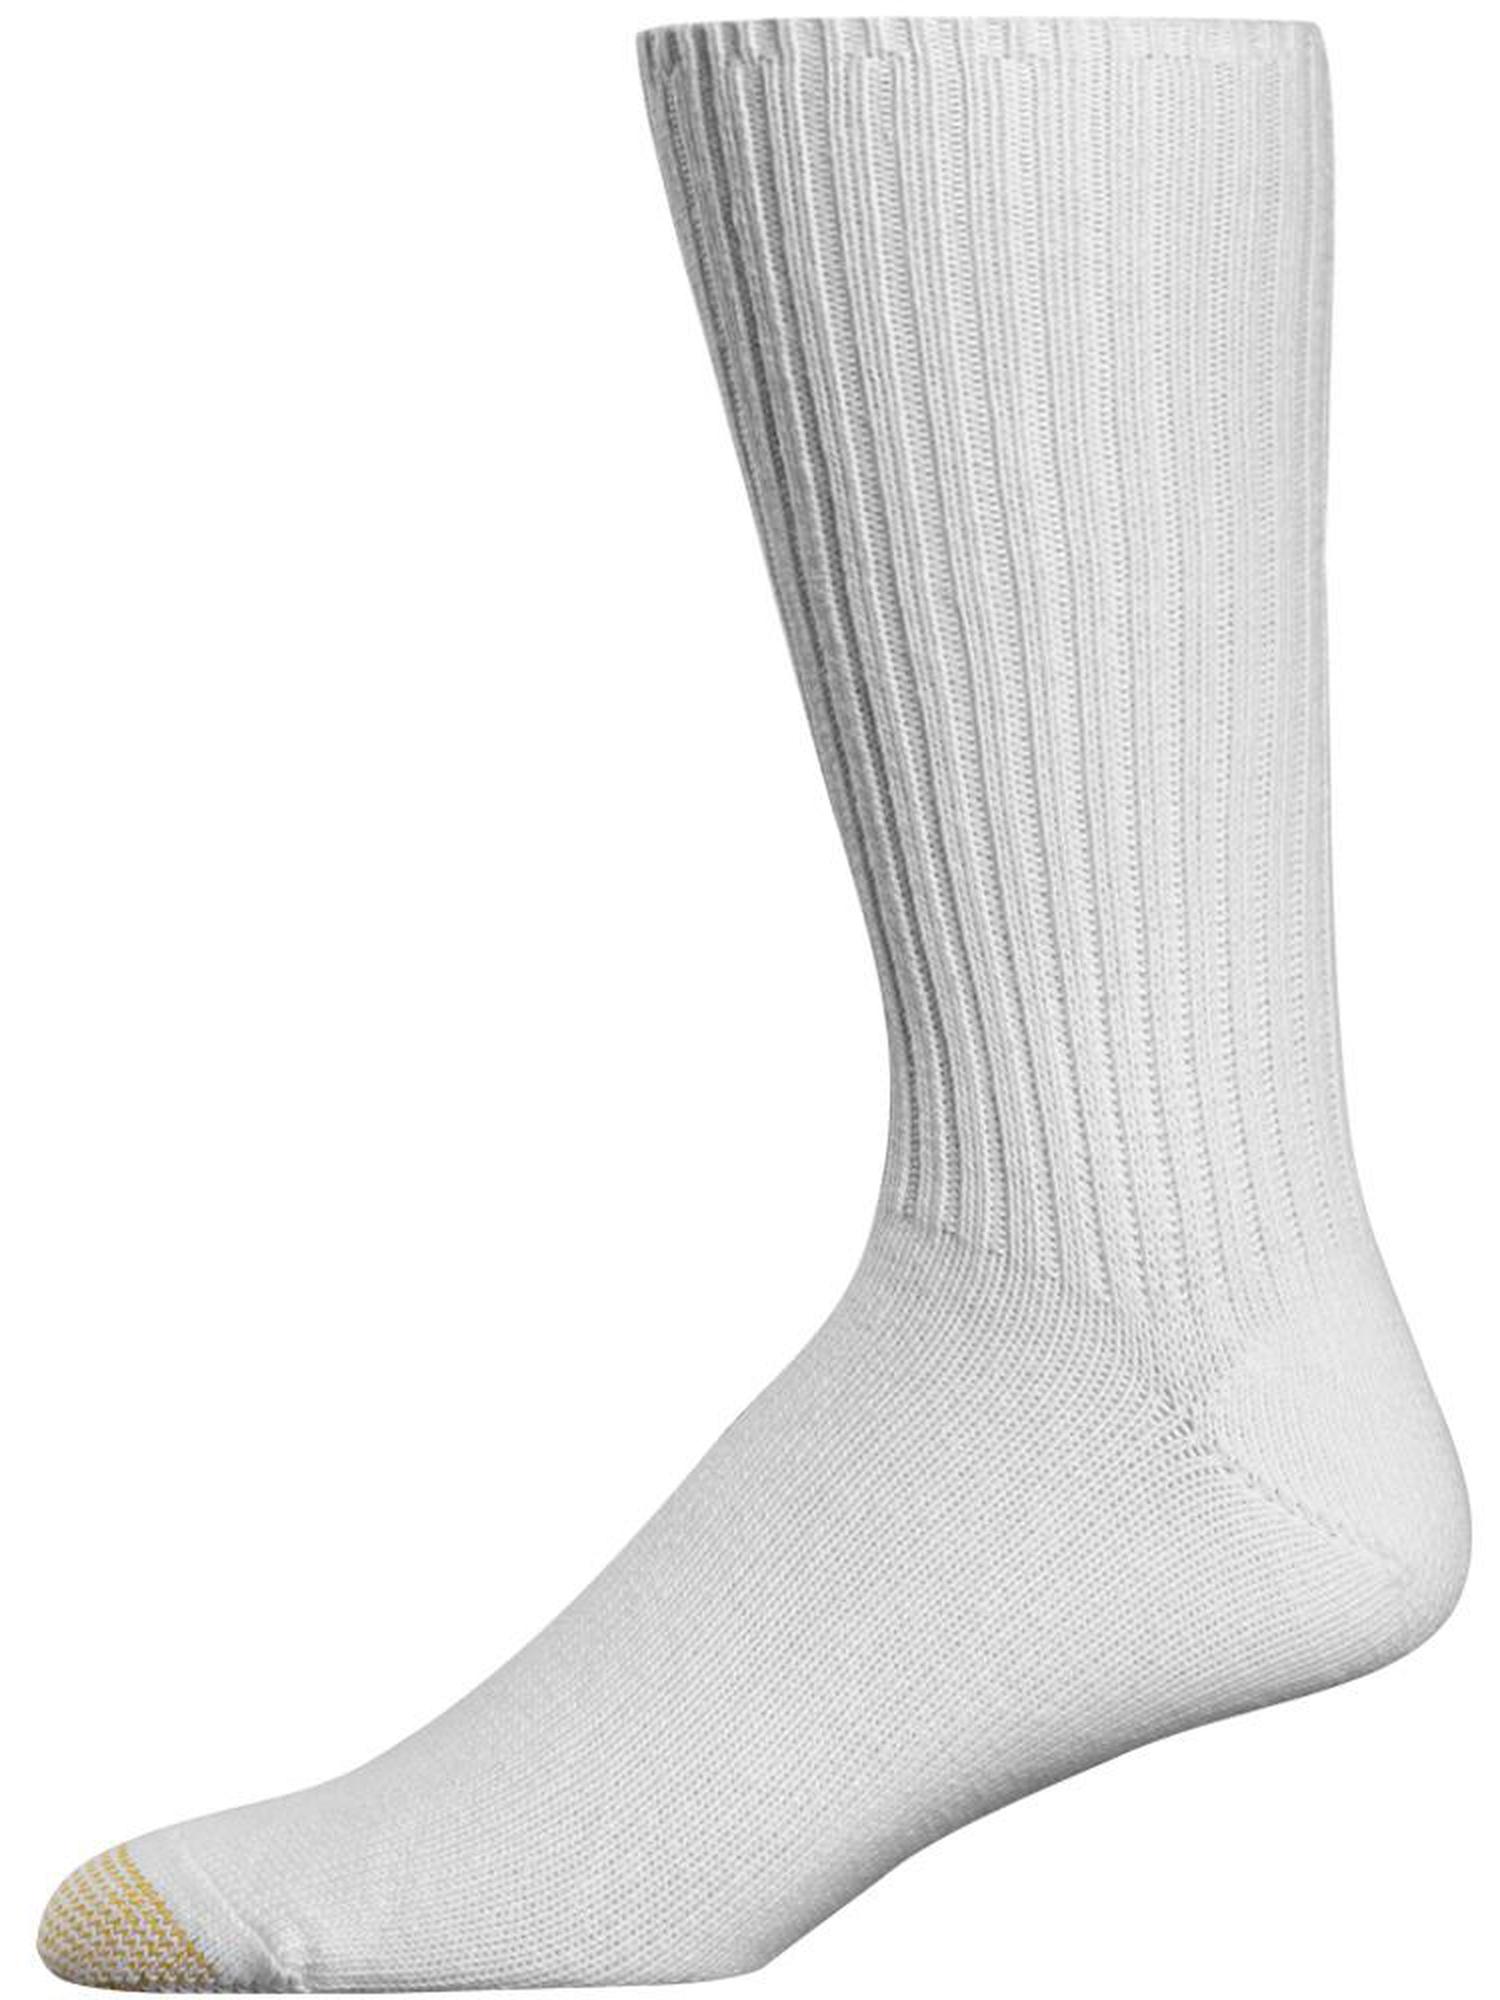 Gold Toe  Fluffies Cotton Crew Socks (Men) - image 1 of 2